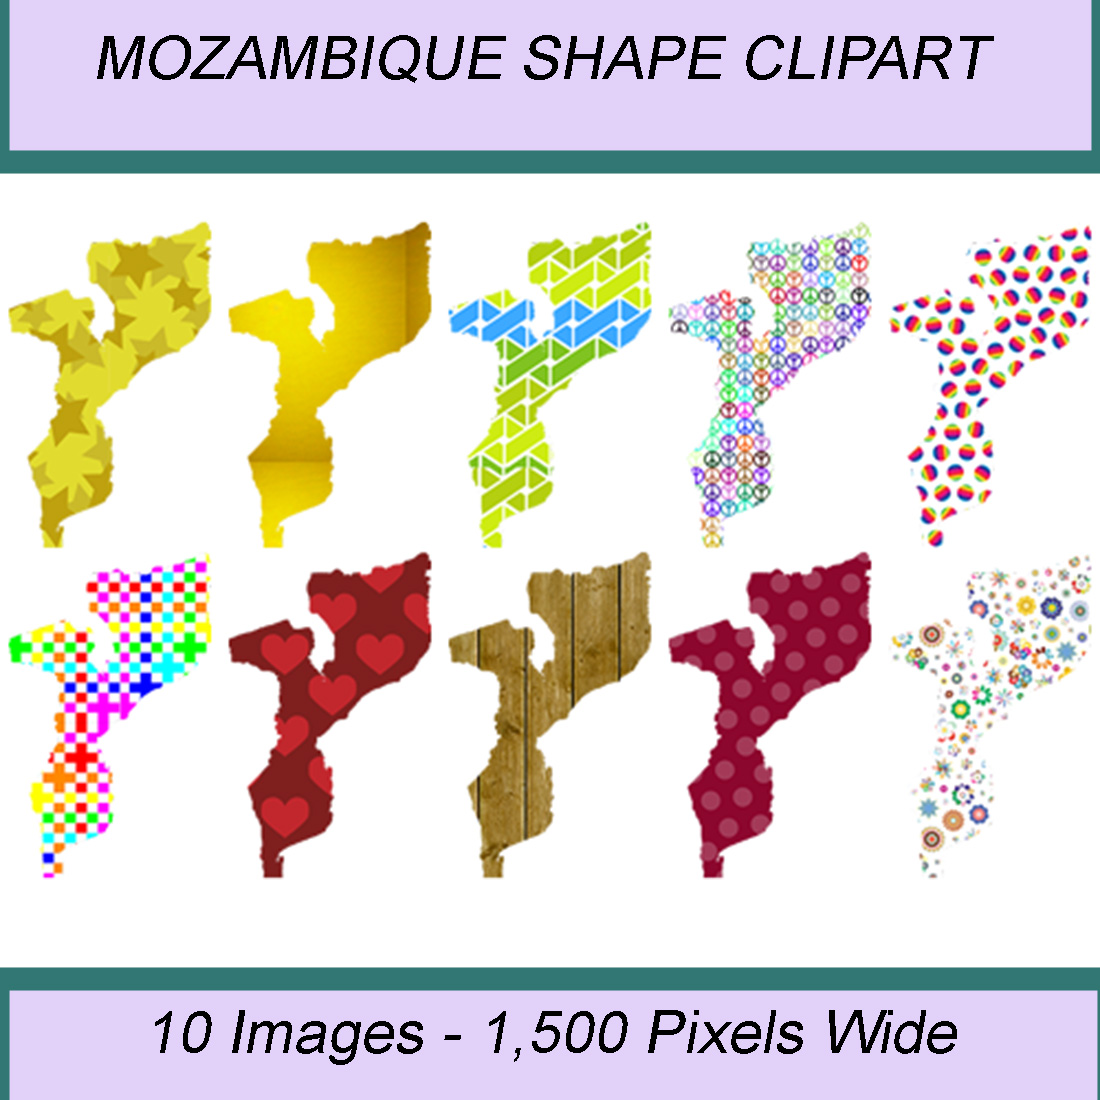 MOZAMBIQUE SHAPE CLIPART ICONS cover image.